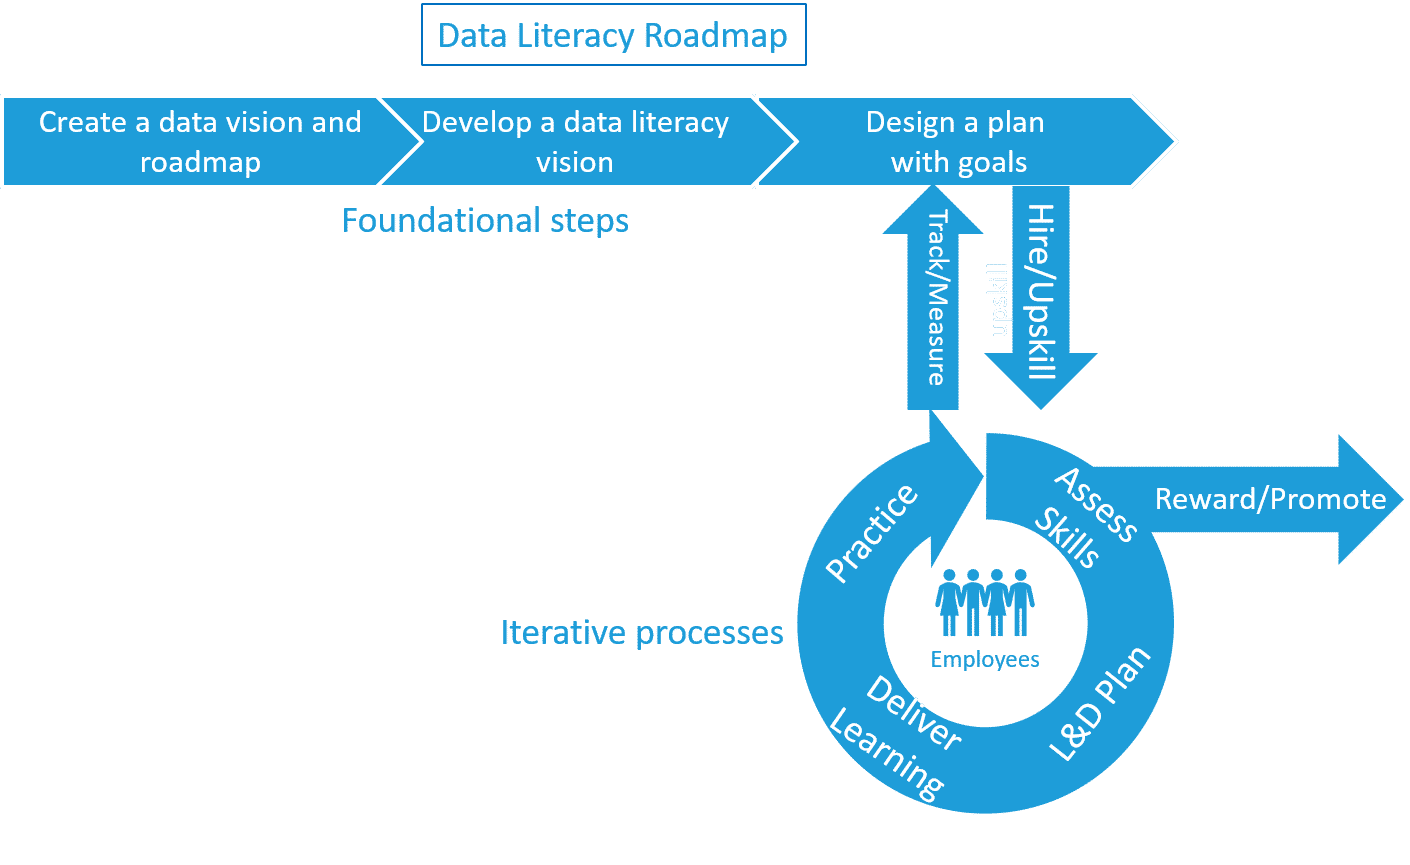 Data Literacy roadmap